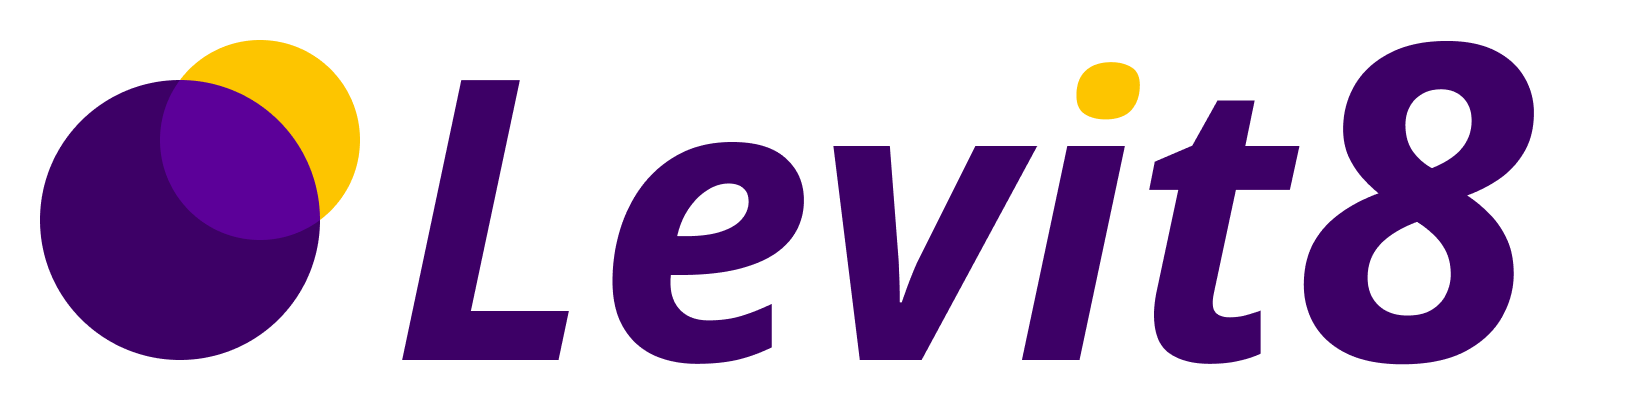 Levit8 logo   primary on light   transparent bg